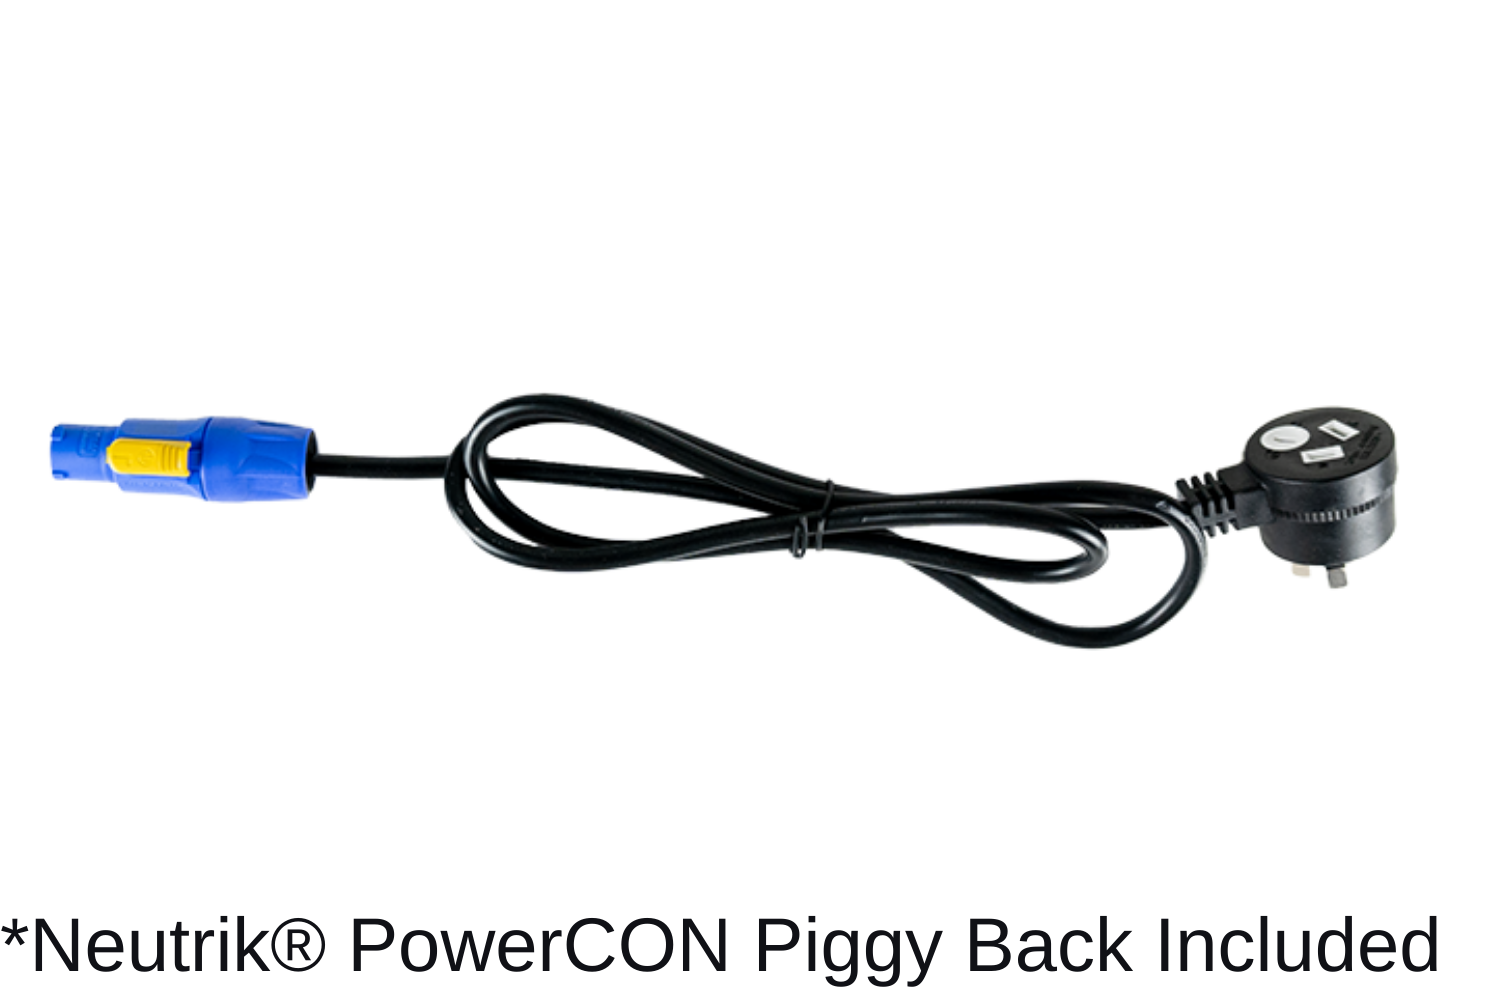 Neutrik_PowerCON Piggy Back Included - 1500 x 1000 px